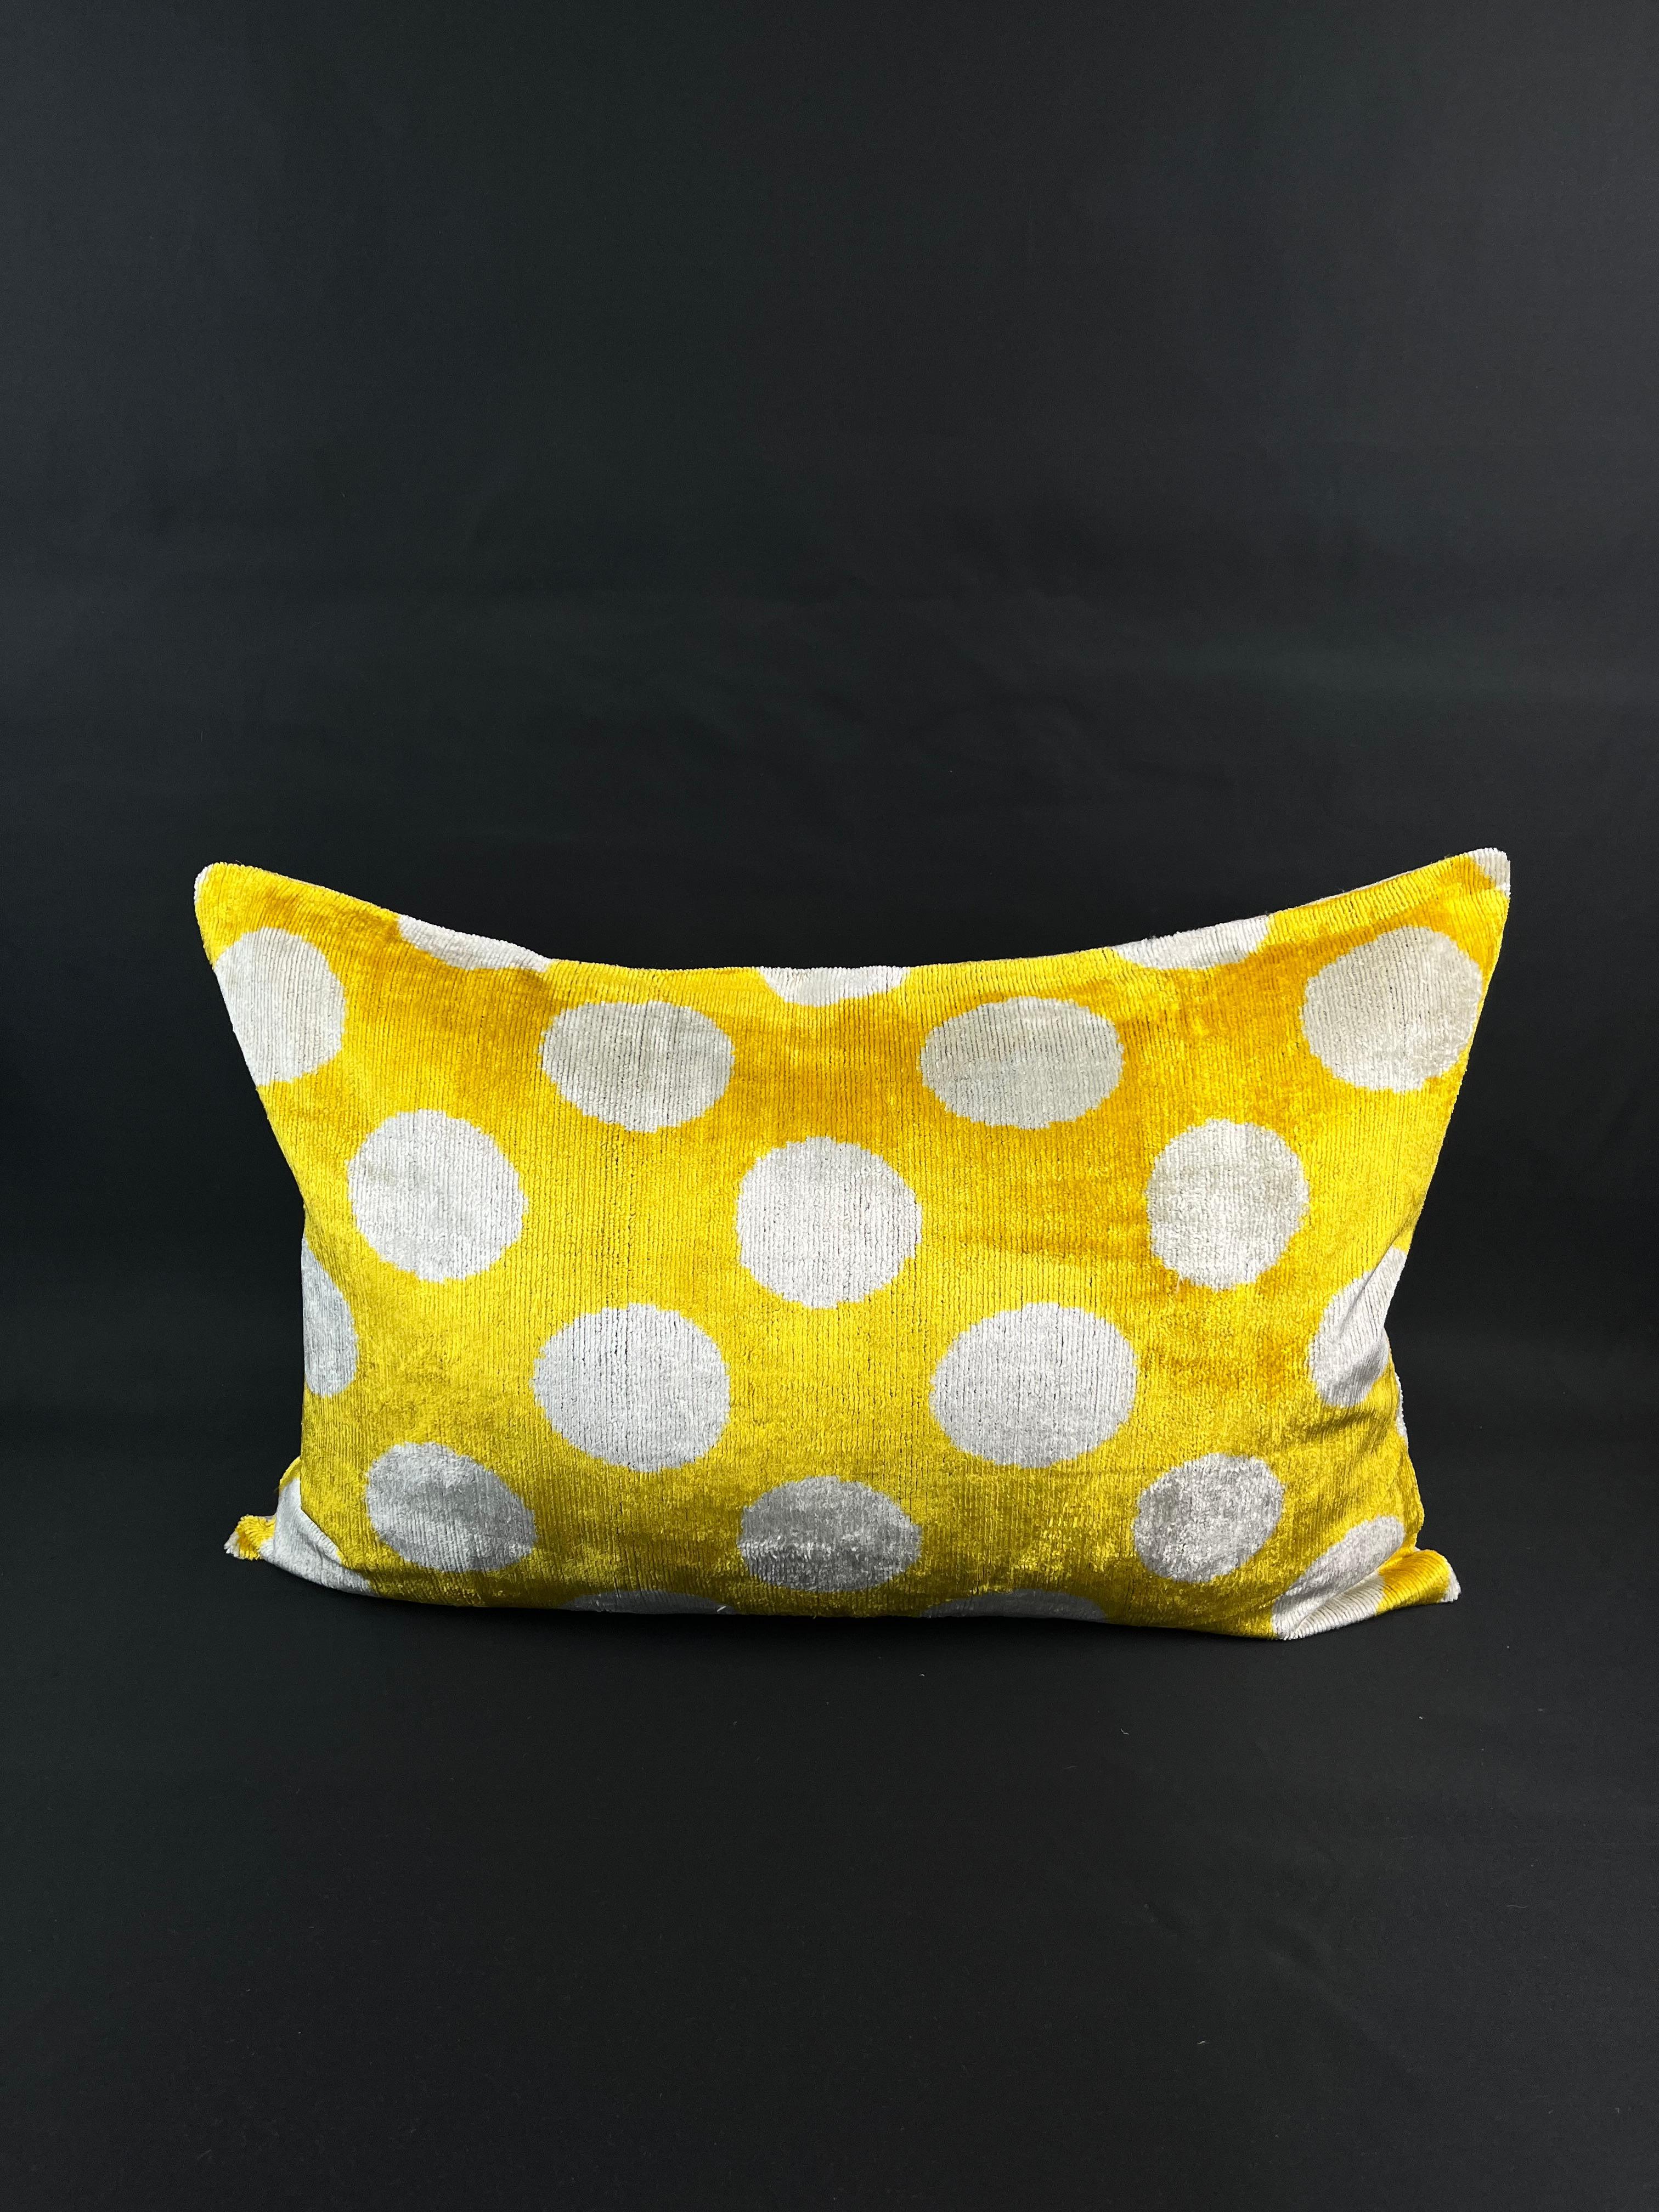 Yellow Polka-Dot Pattern Velvet Silk Ikat Pillow Cover In New Condition For Sale In Houston, TX